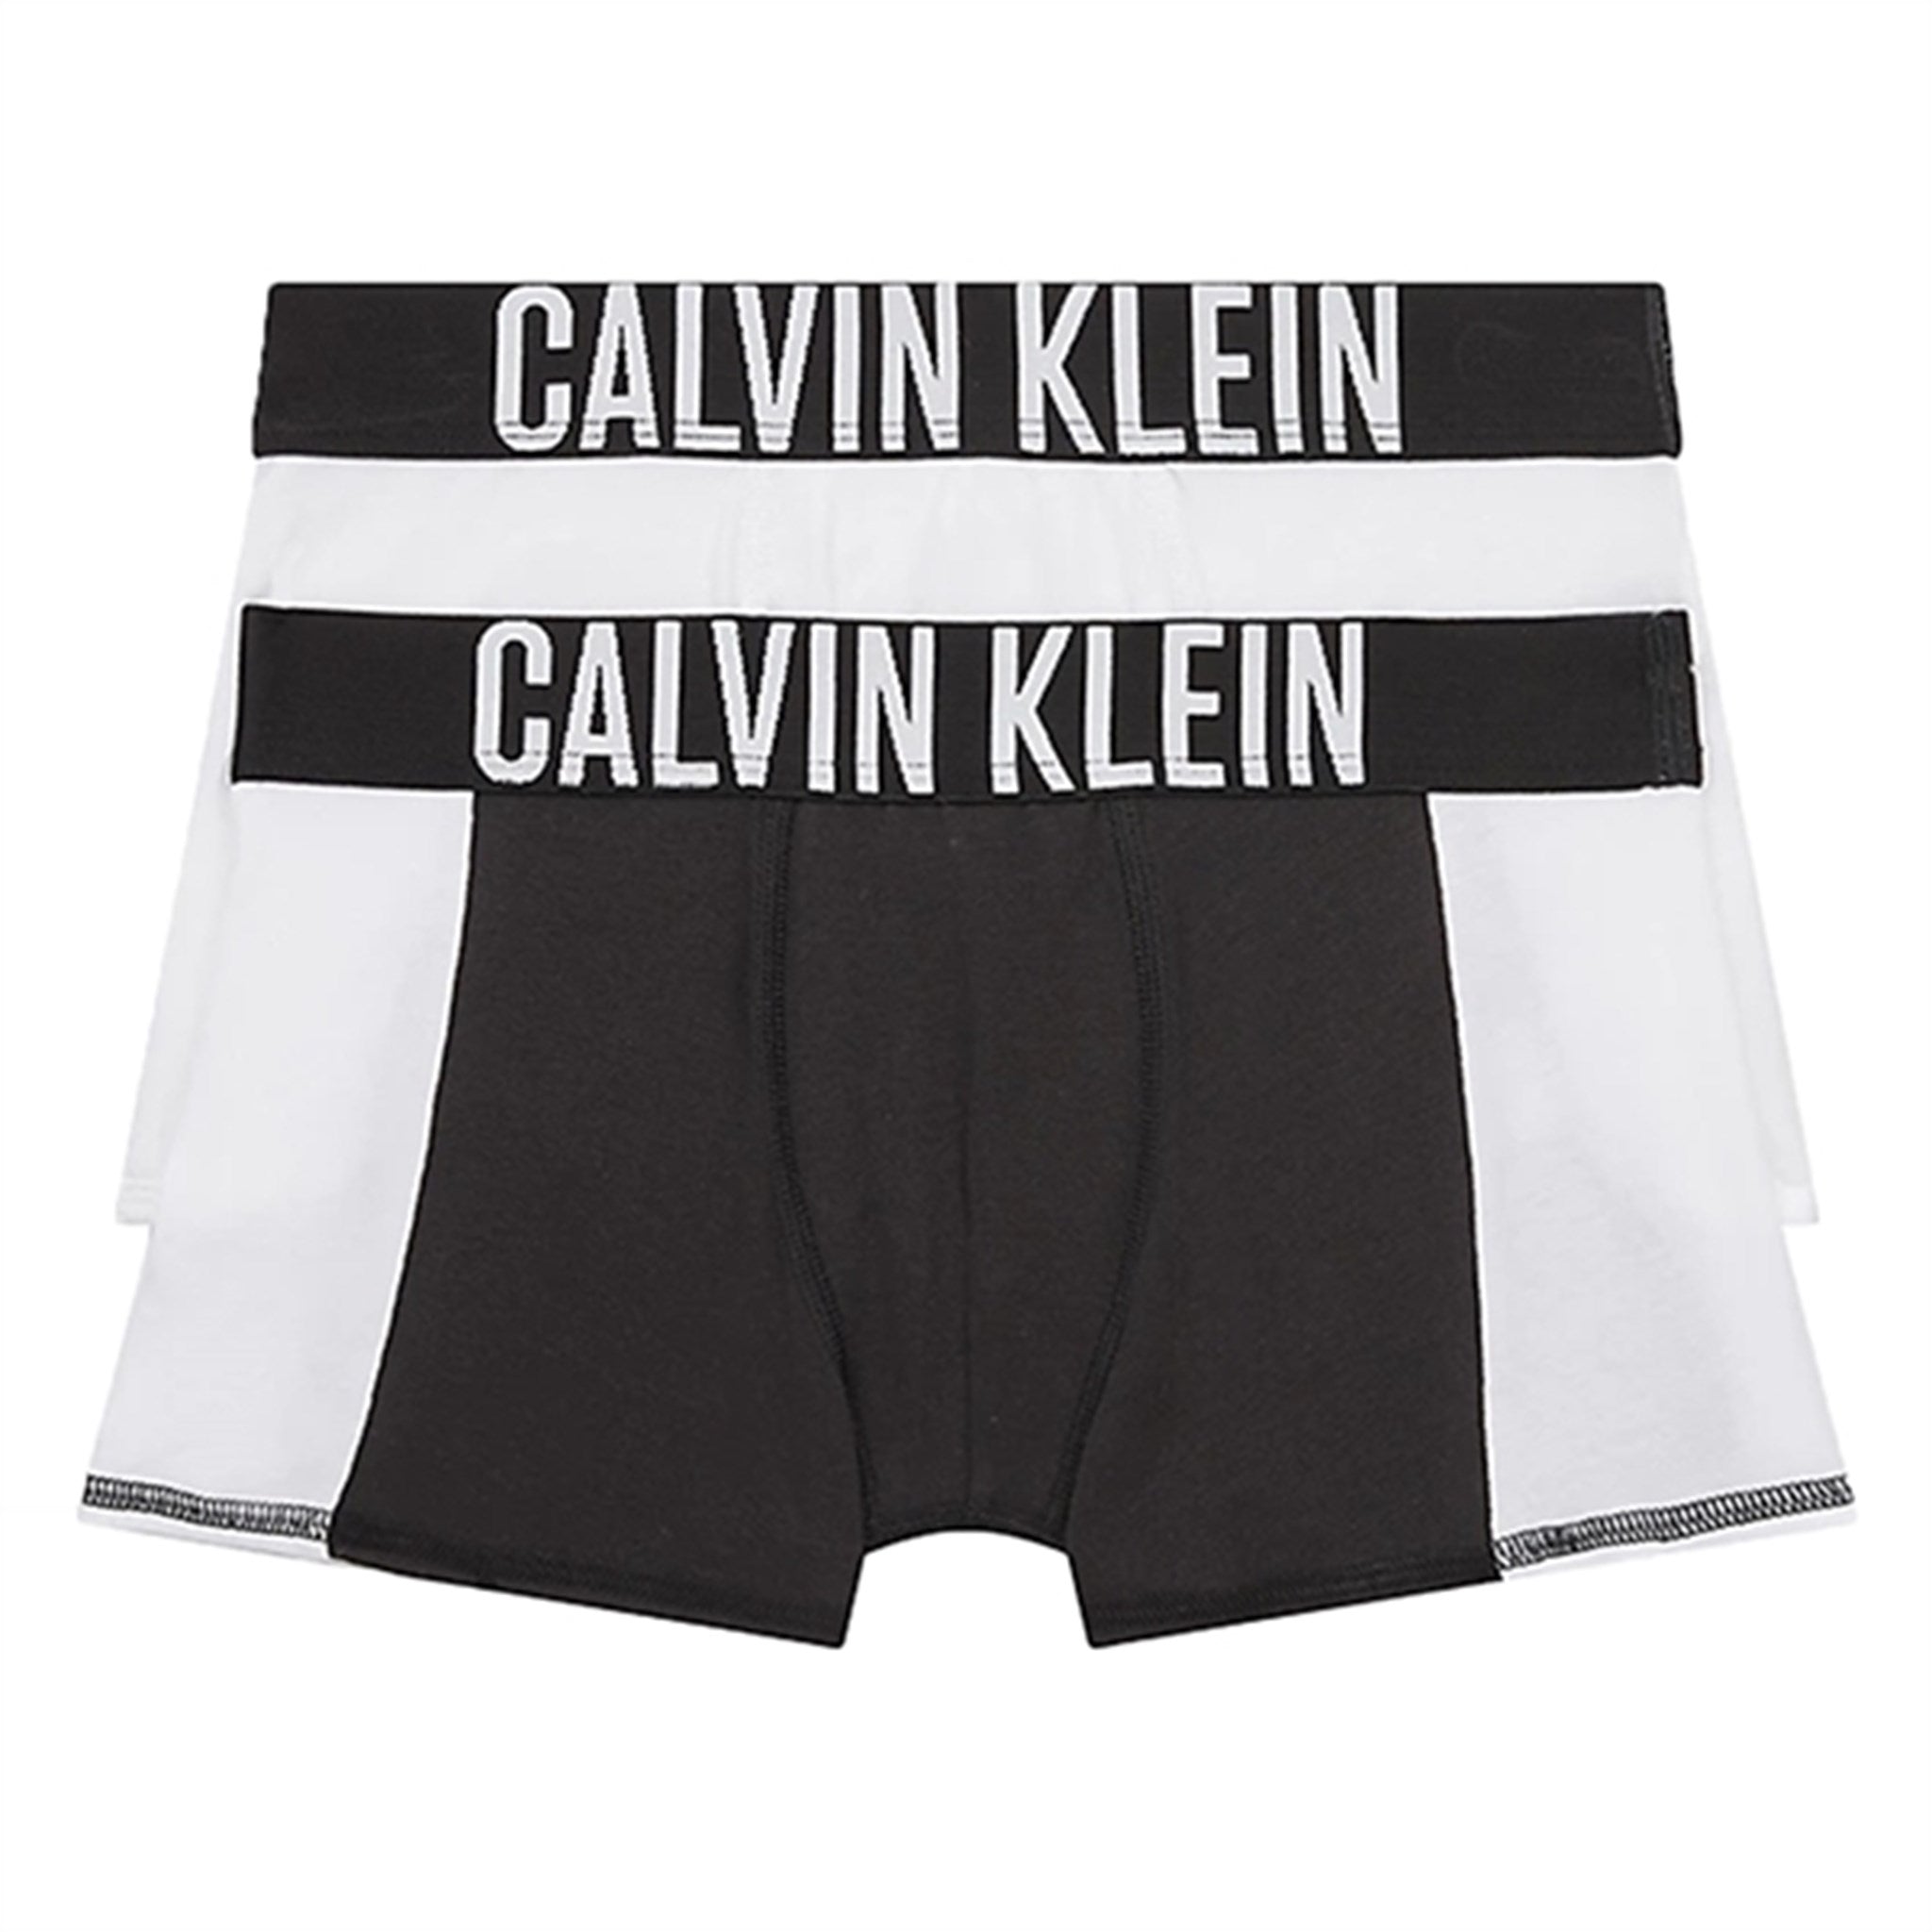 Calvin Klein Boxershorts 2-Pack Black/White